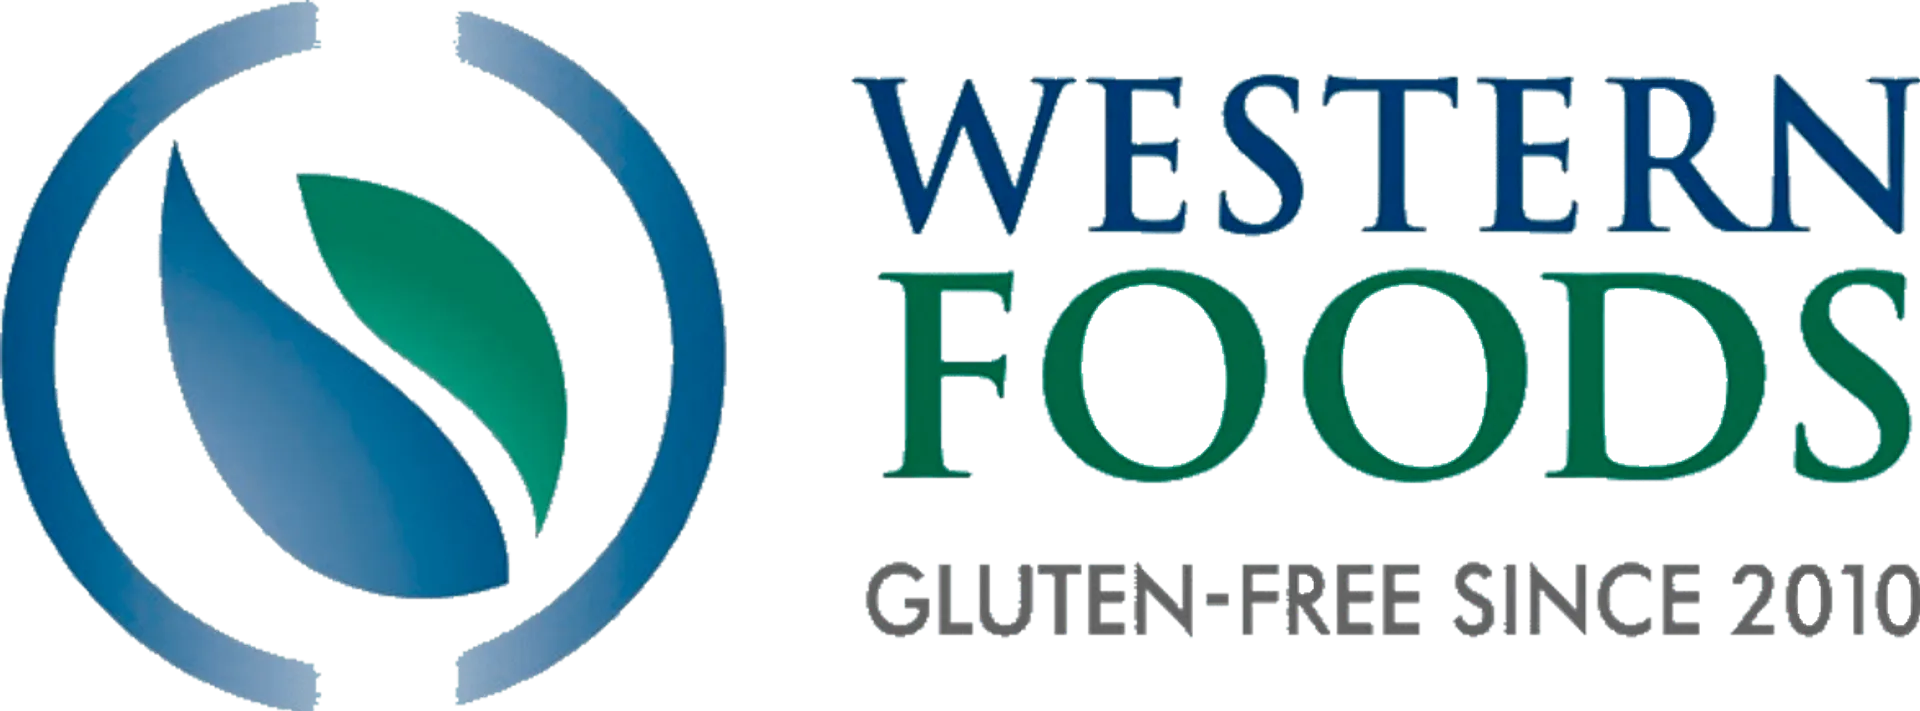 WESTERN FOODS logo